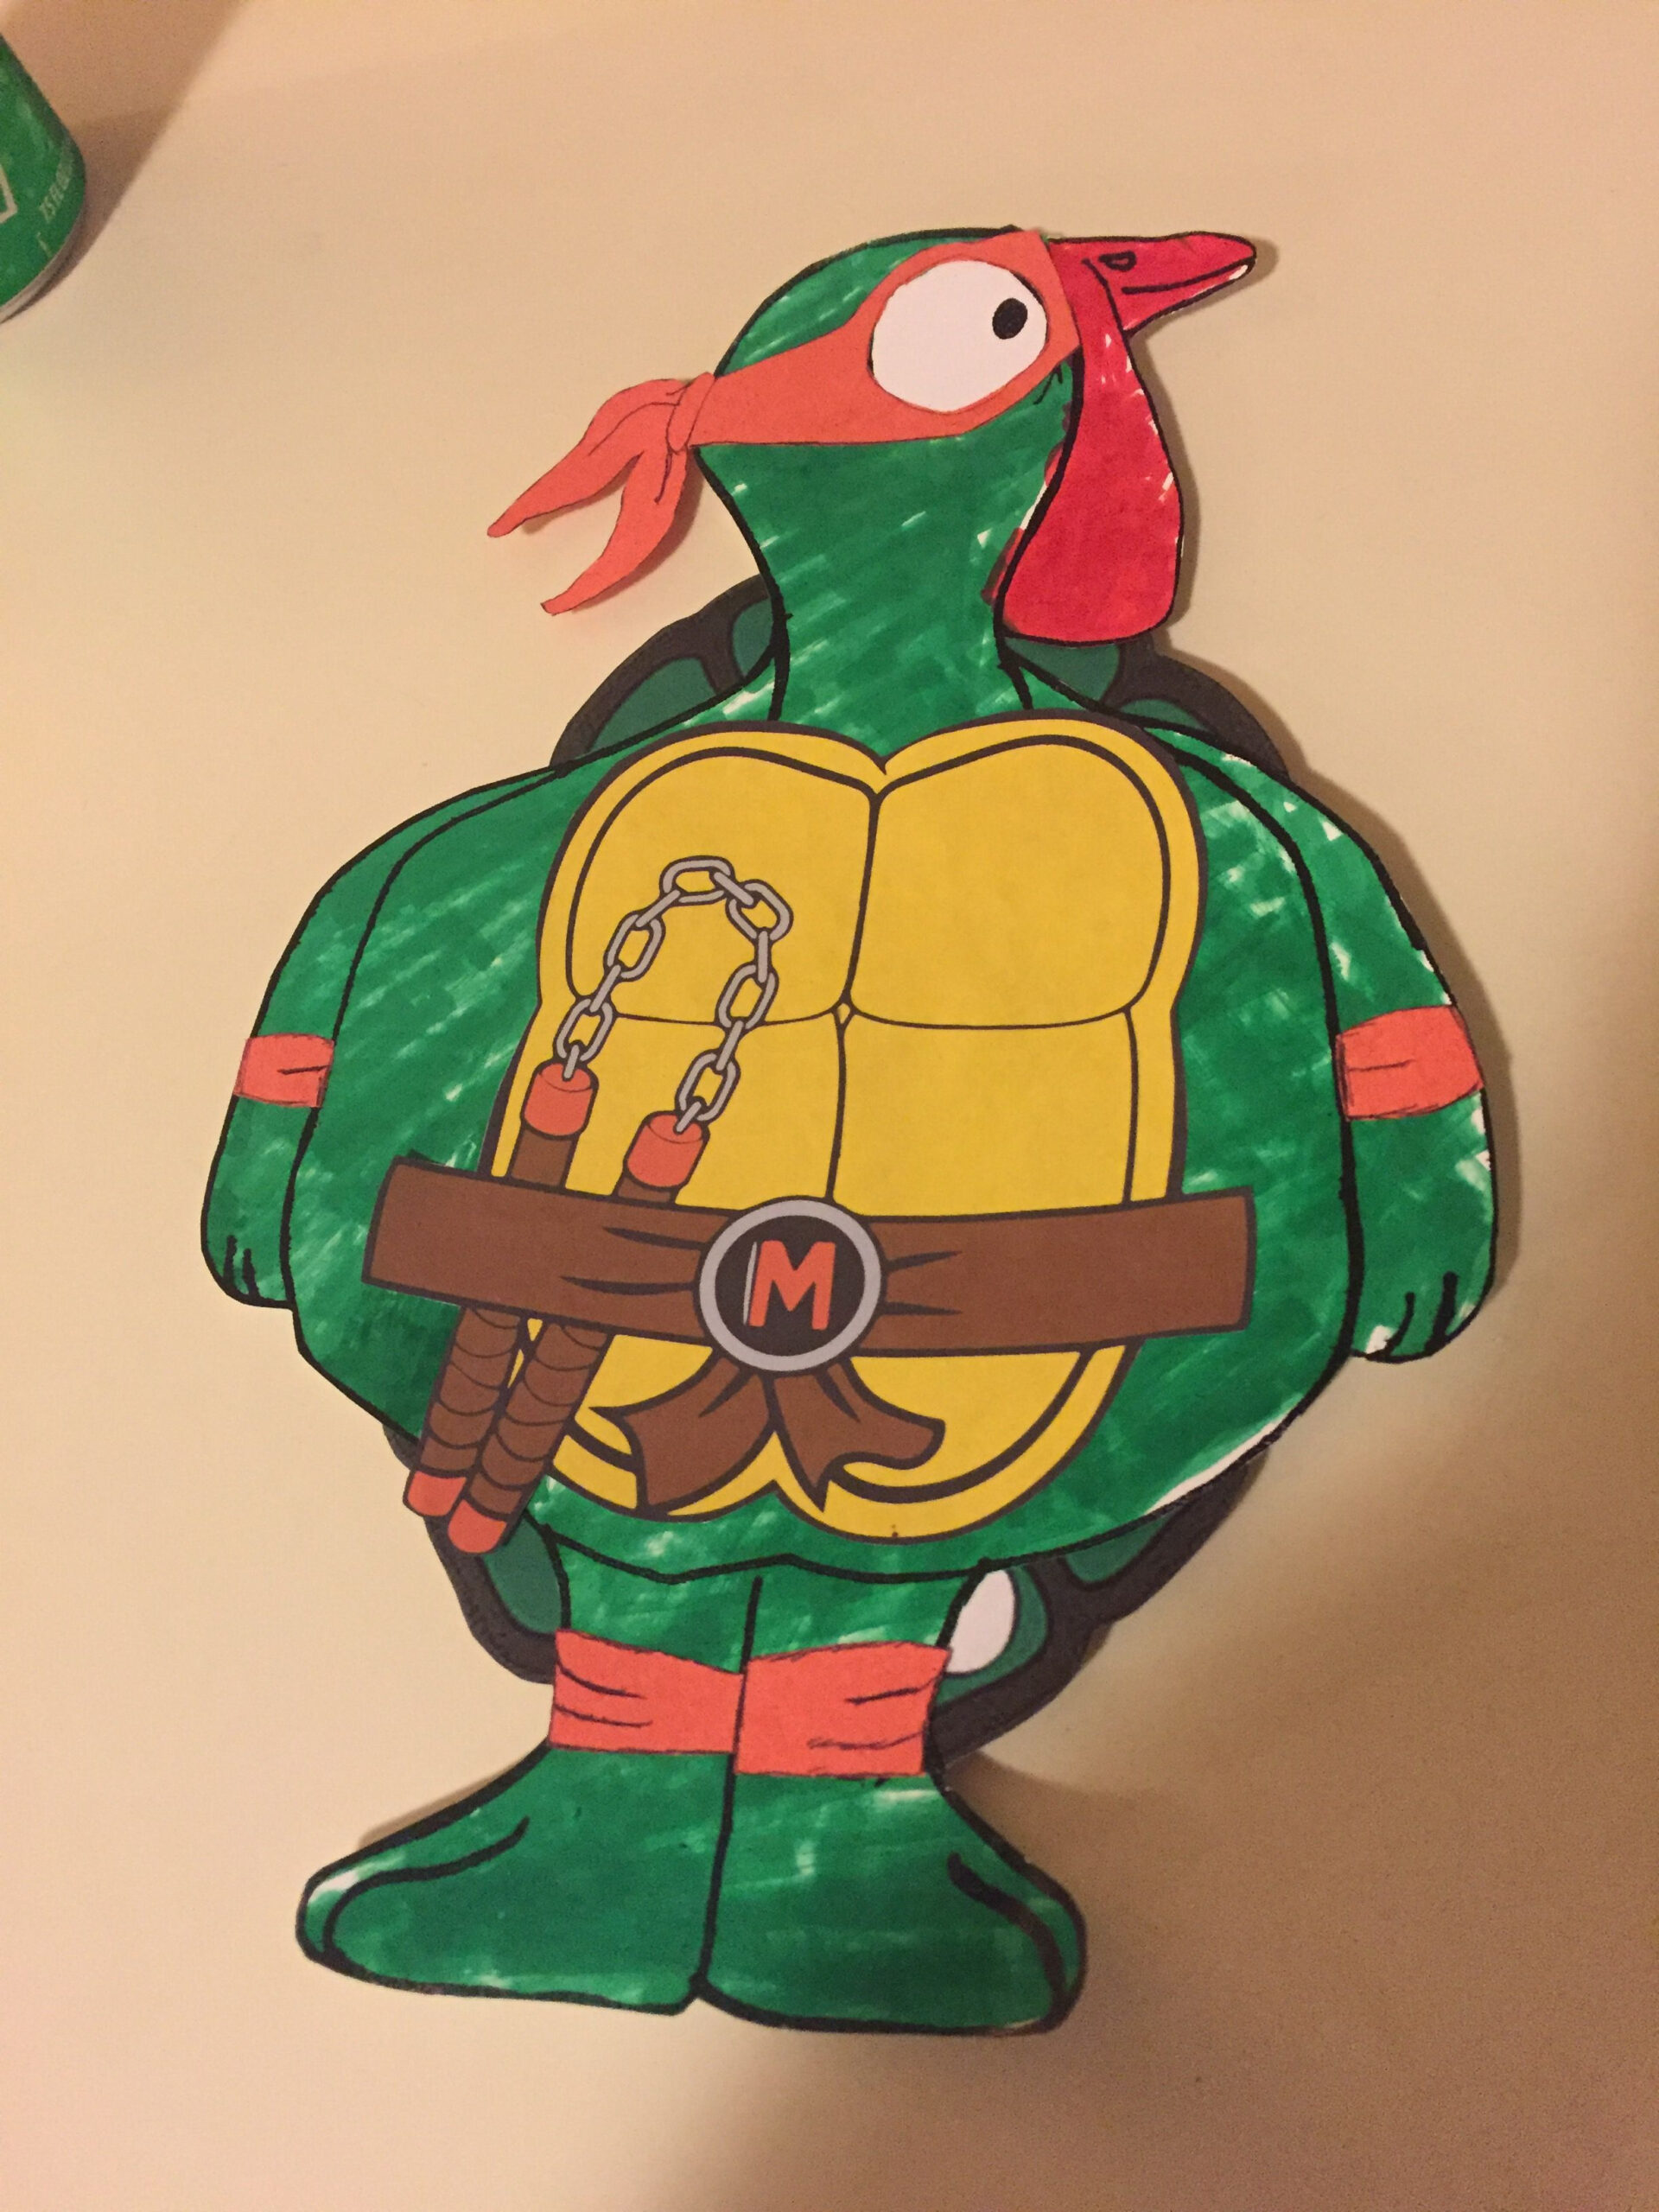 Tom The Turkey In Disguise As Michelangelo The Ninja Turtle Turkey 